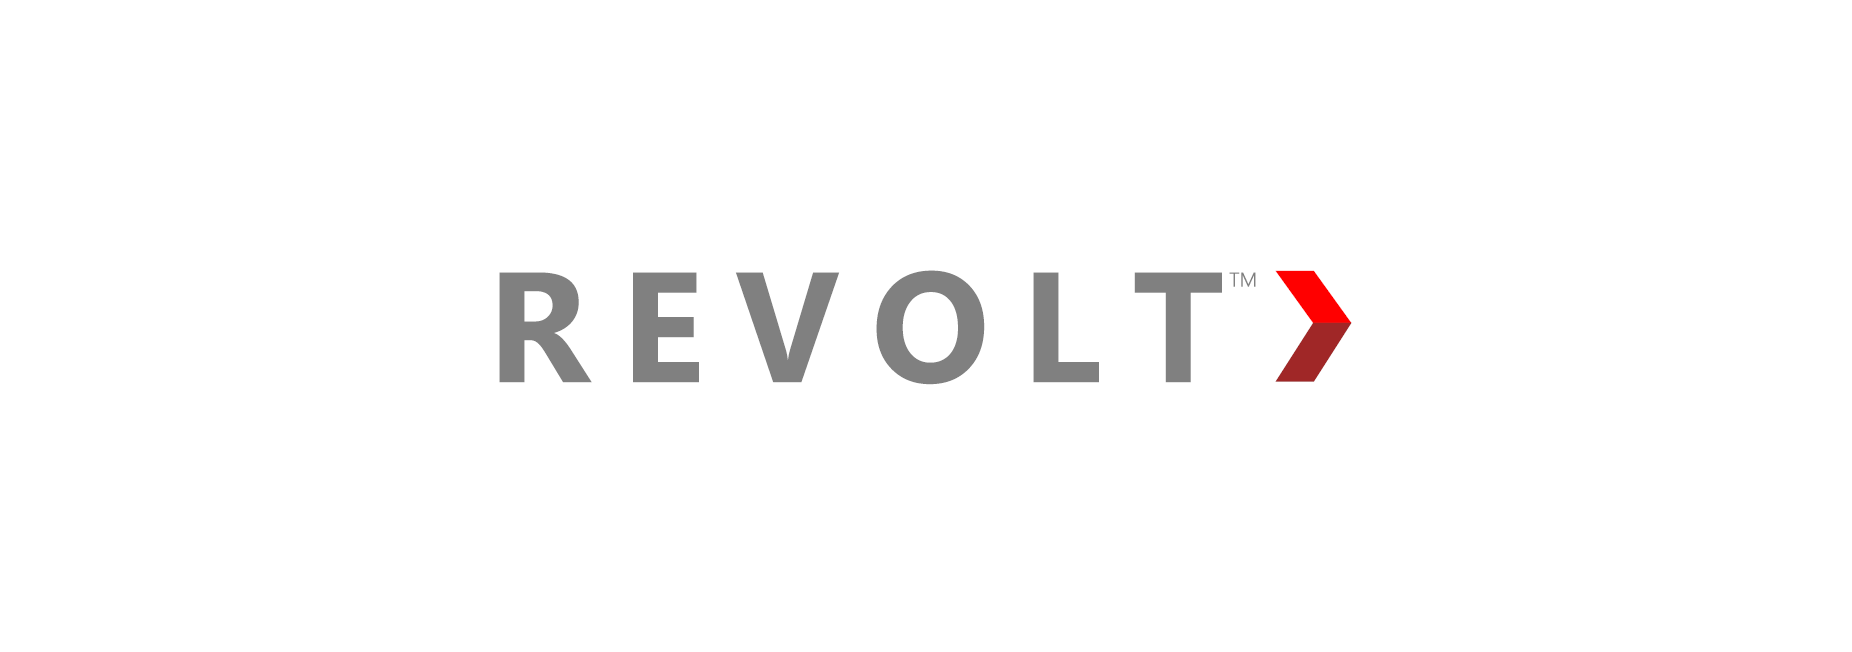 Revolt Logo